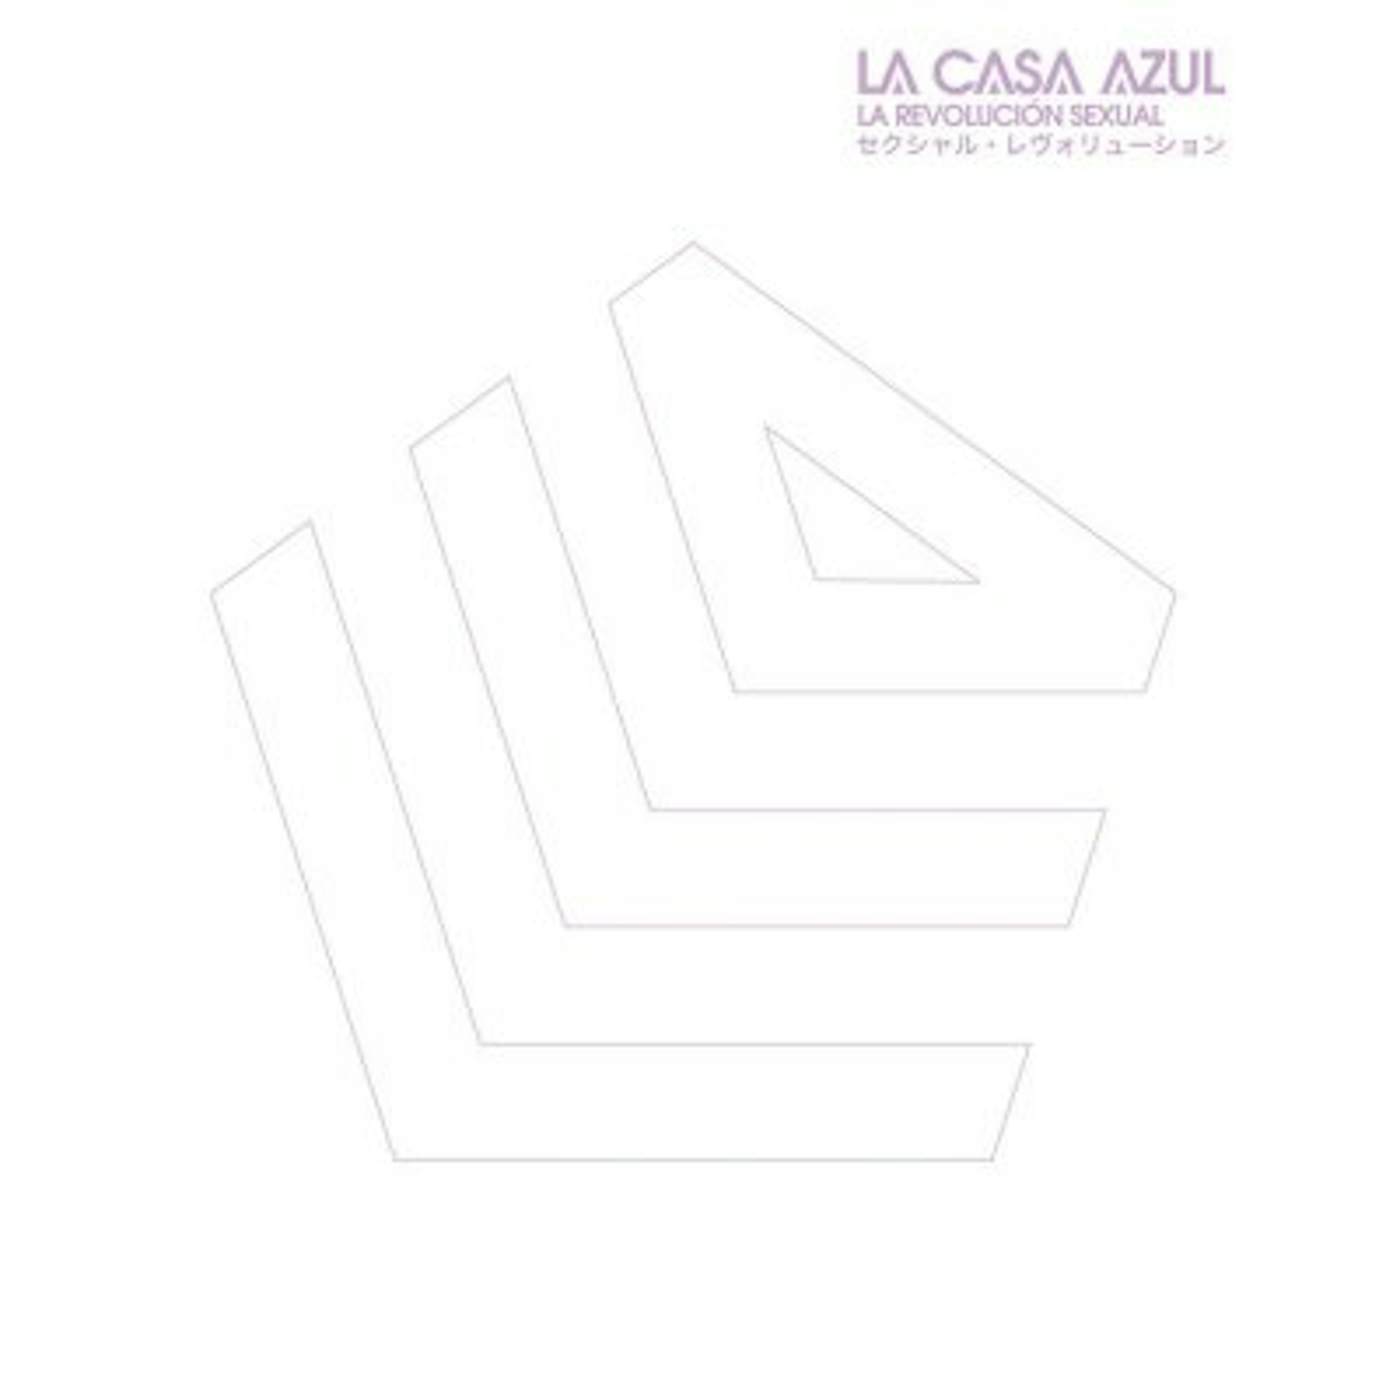 La Casa Azul LA REVOLUCION SEXUAL Vinyl Record